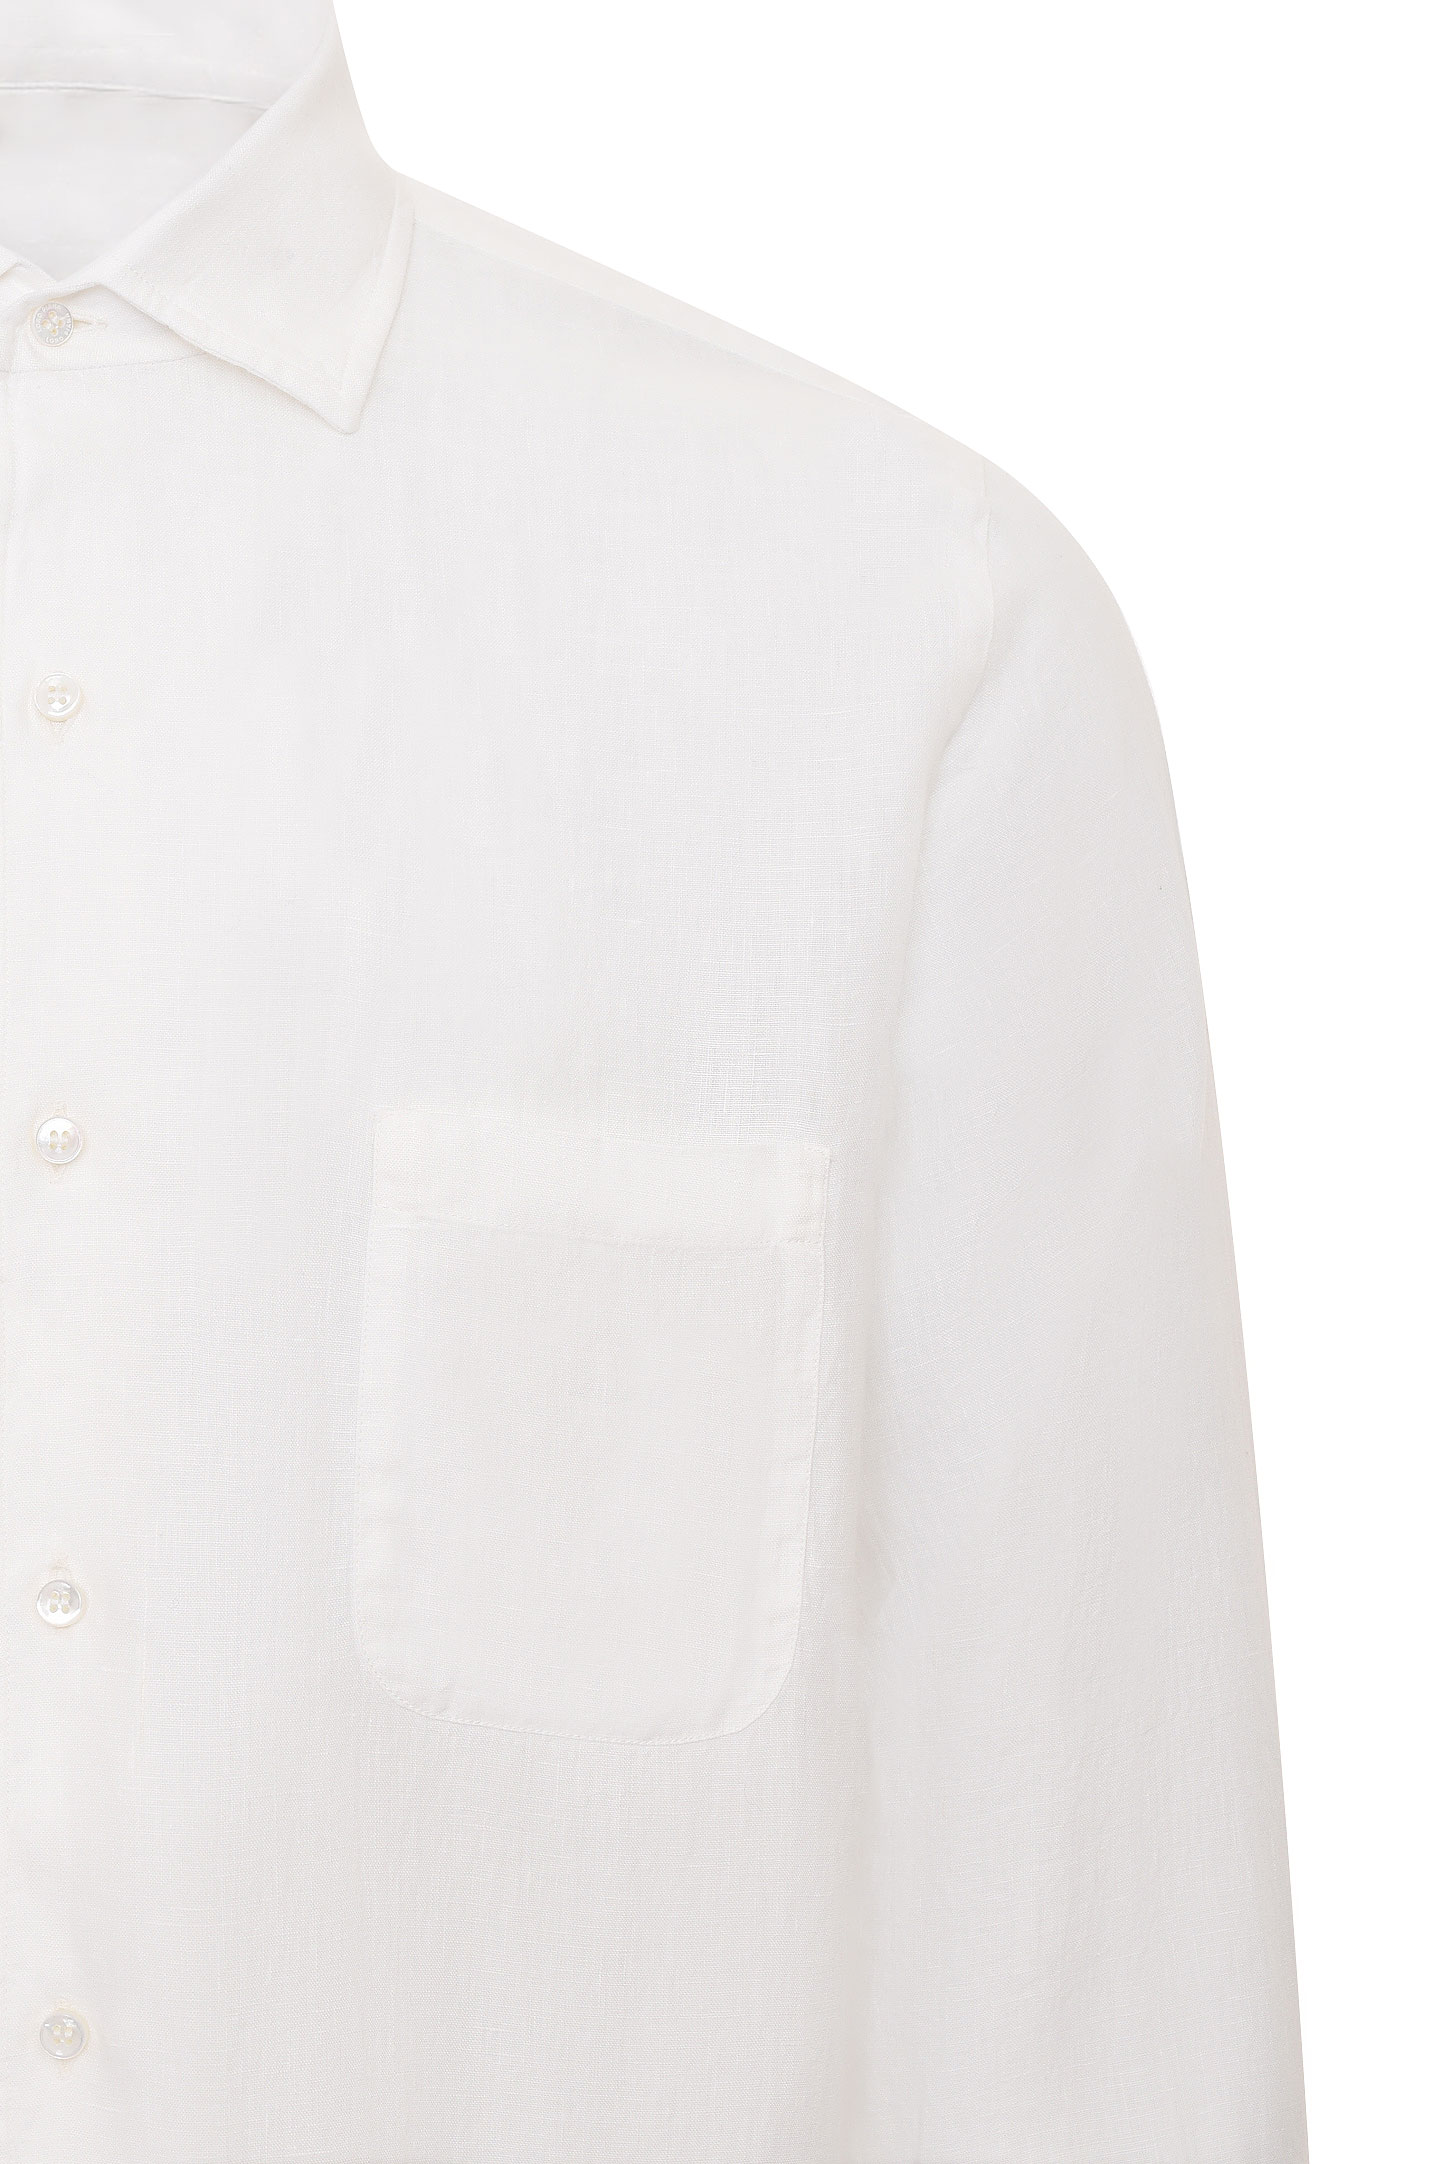 Рубашка LORO PIANA F1-FAL6255, цвет: Белый, Мужской